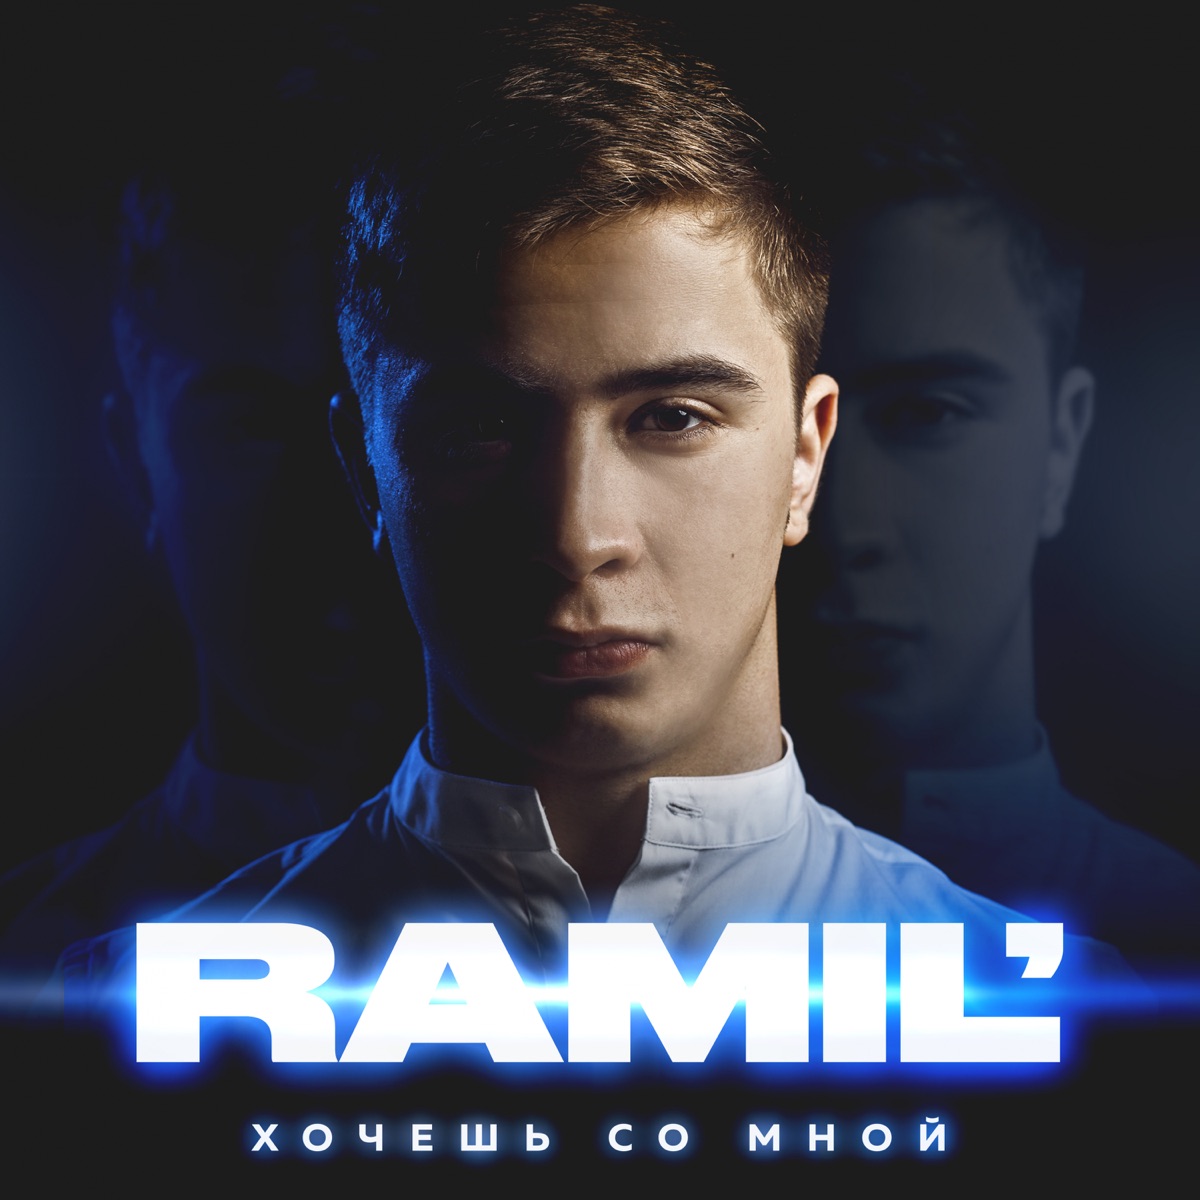 Хочешь со мной - Album by Ramil' - Apple Music